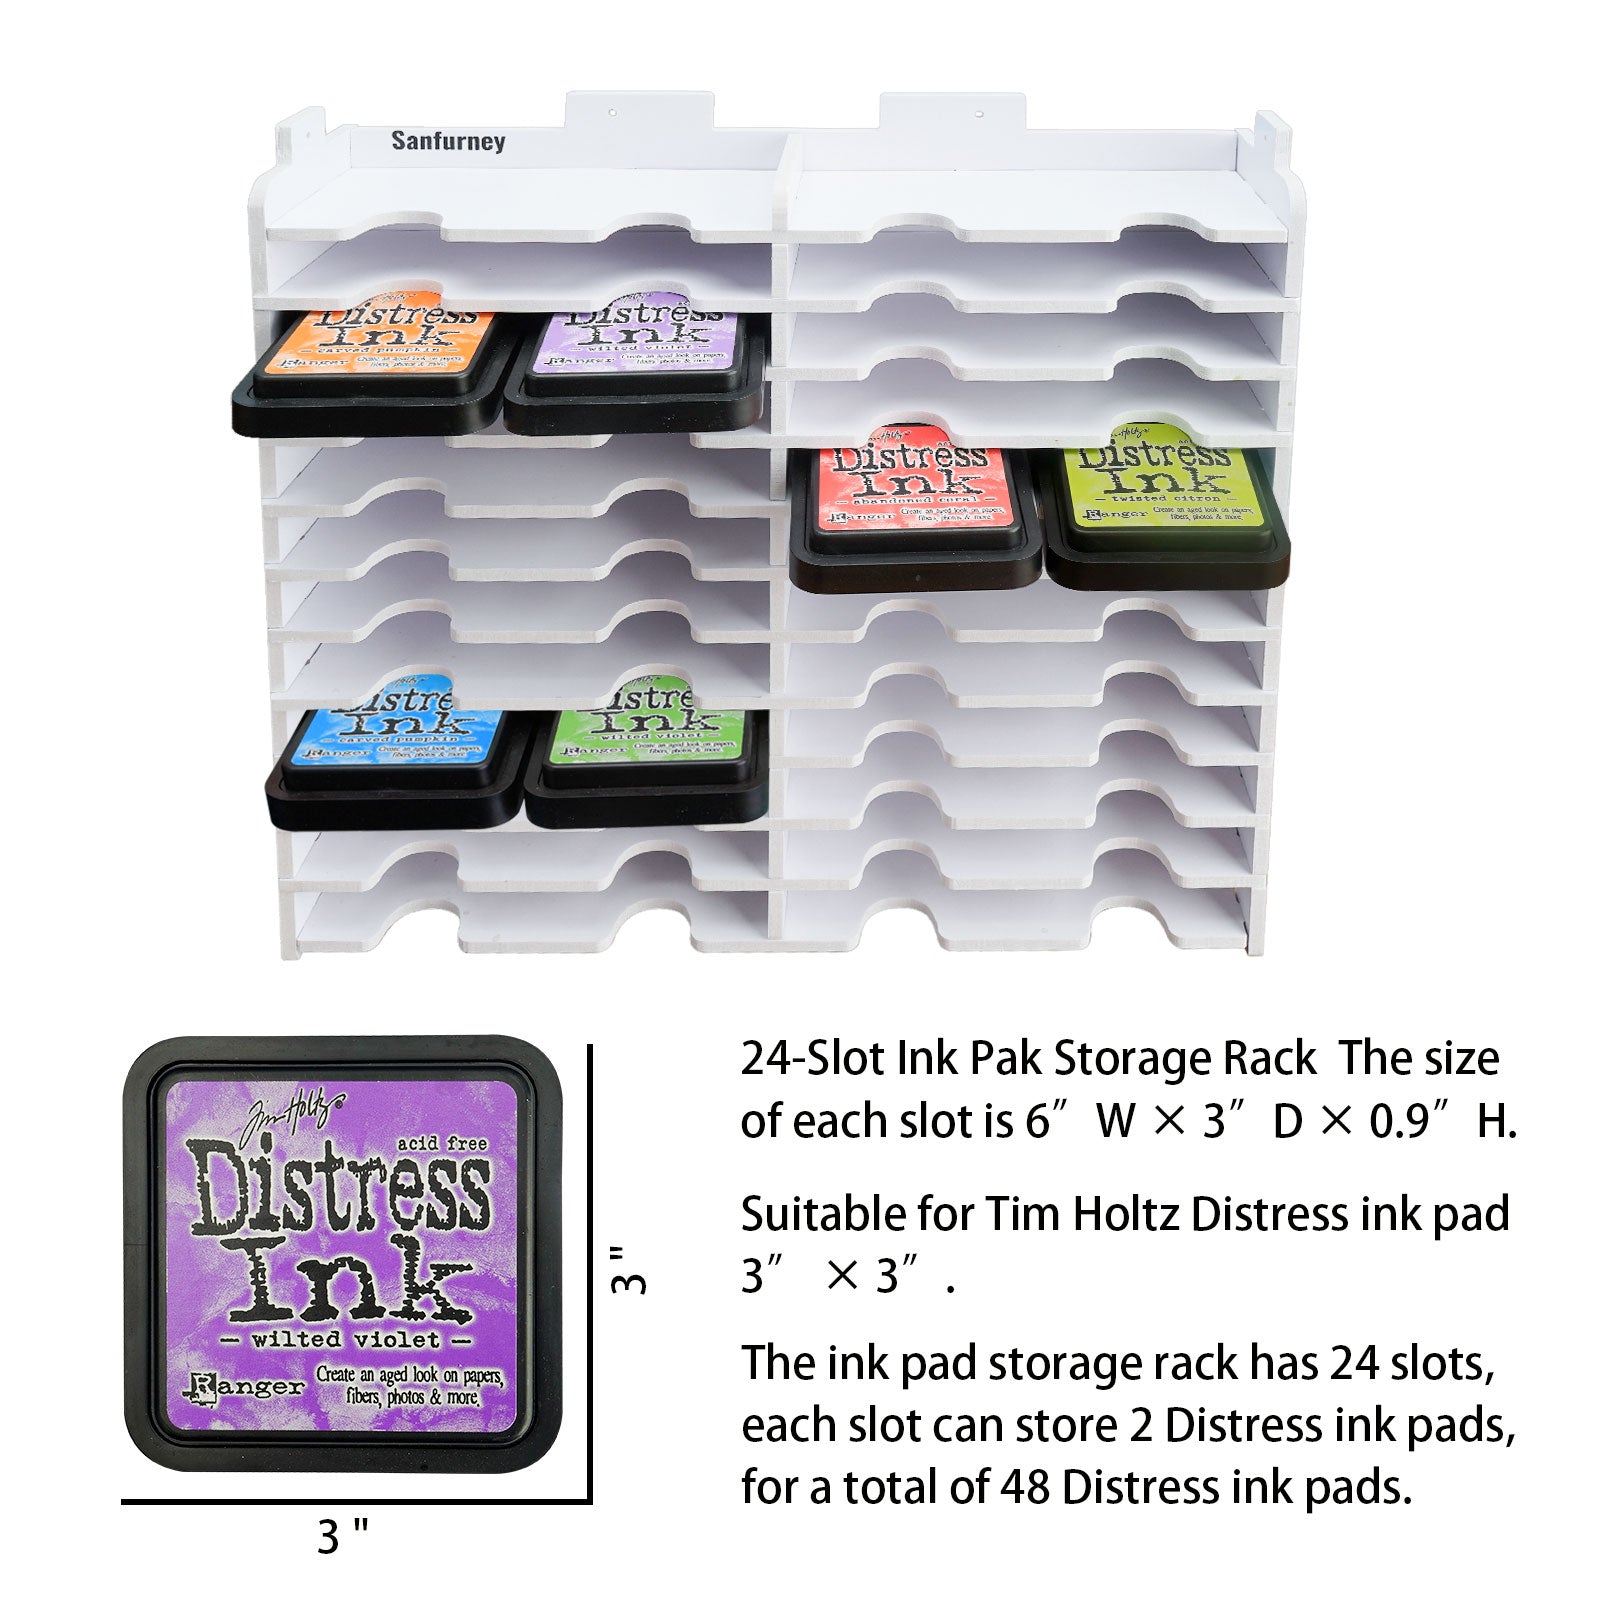 Sanfurney 12 Slots Slim Ink Pads Top Rack and Stamp Pad Storage Organizer